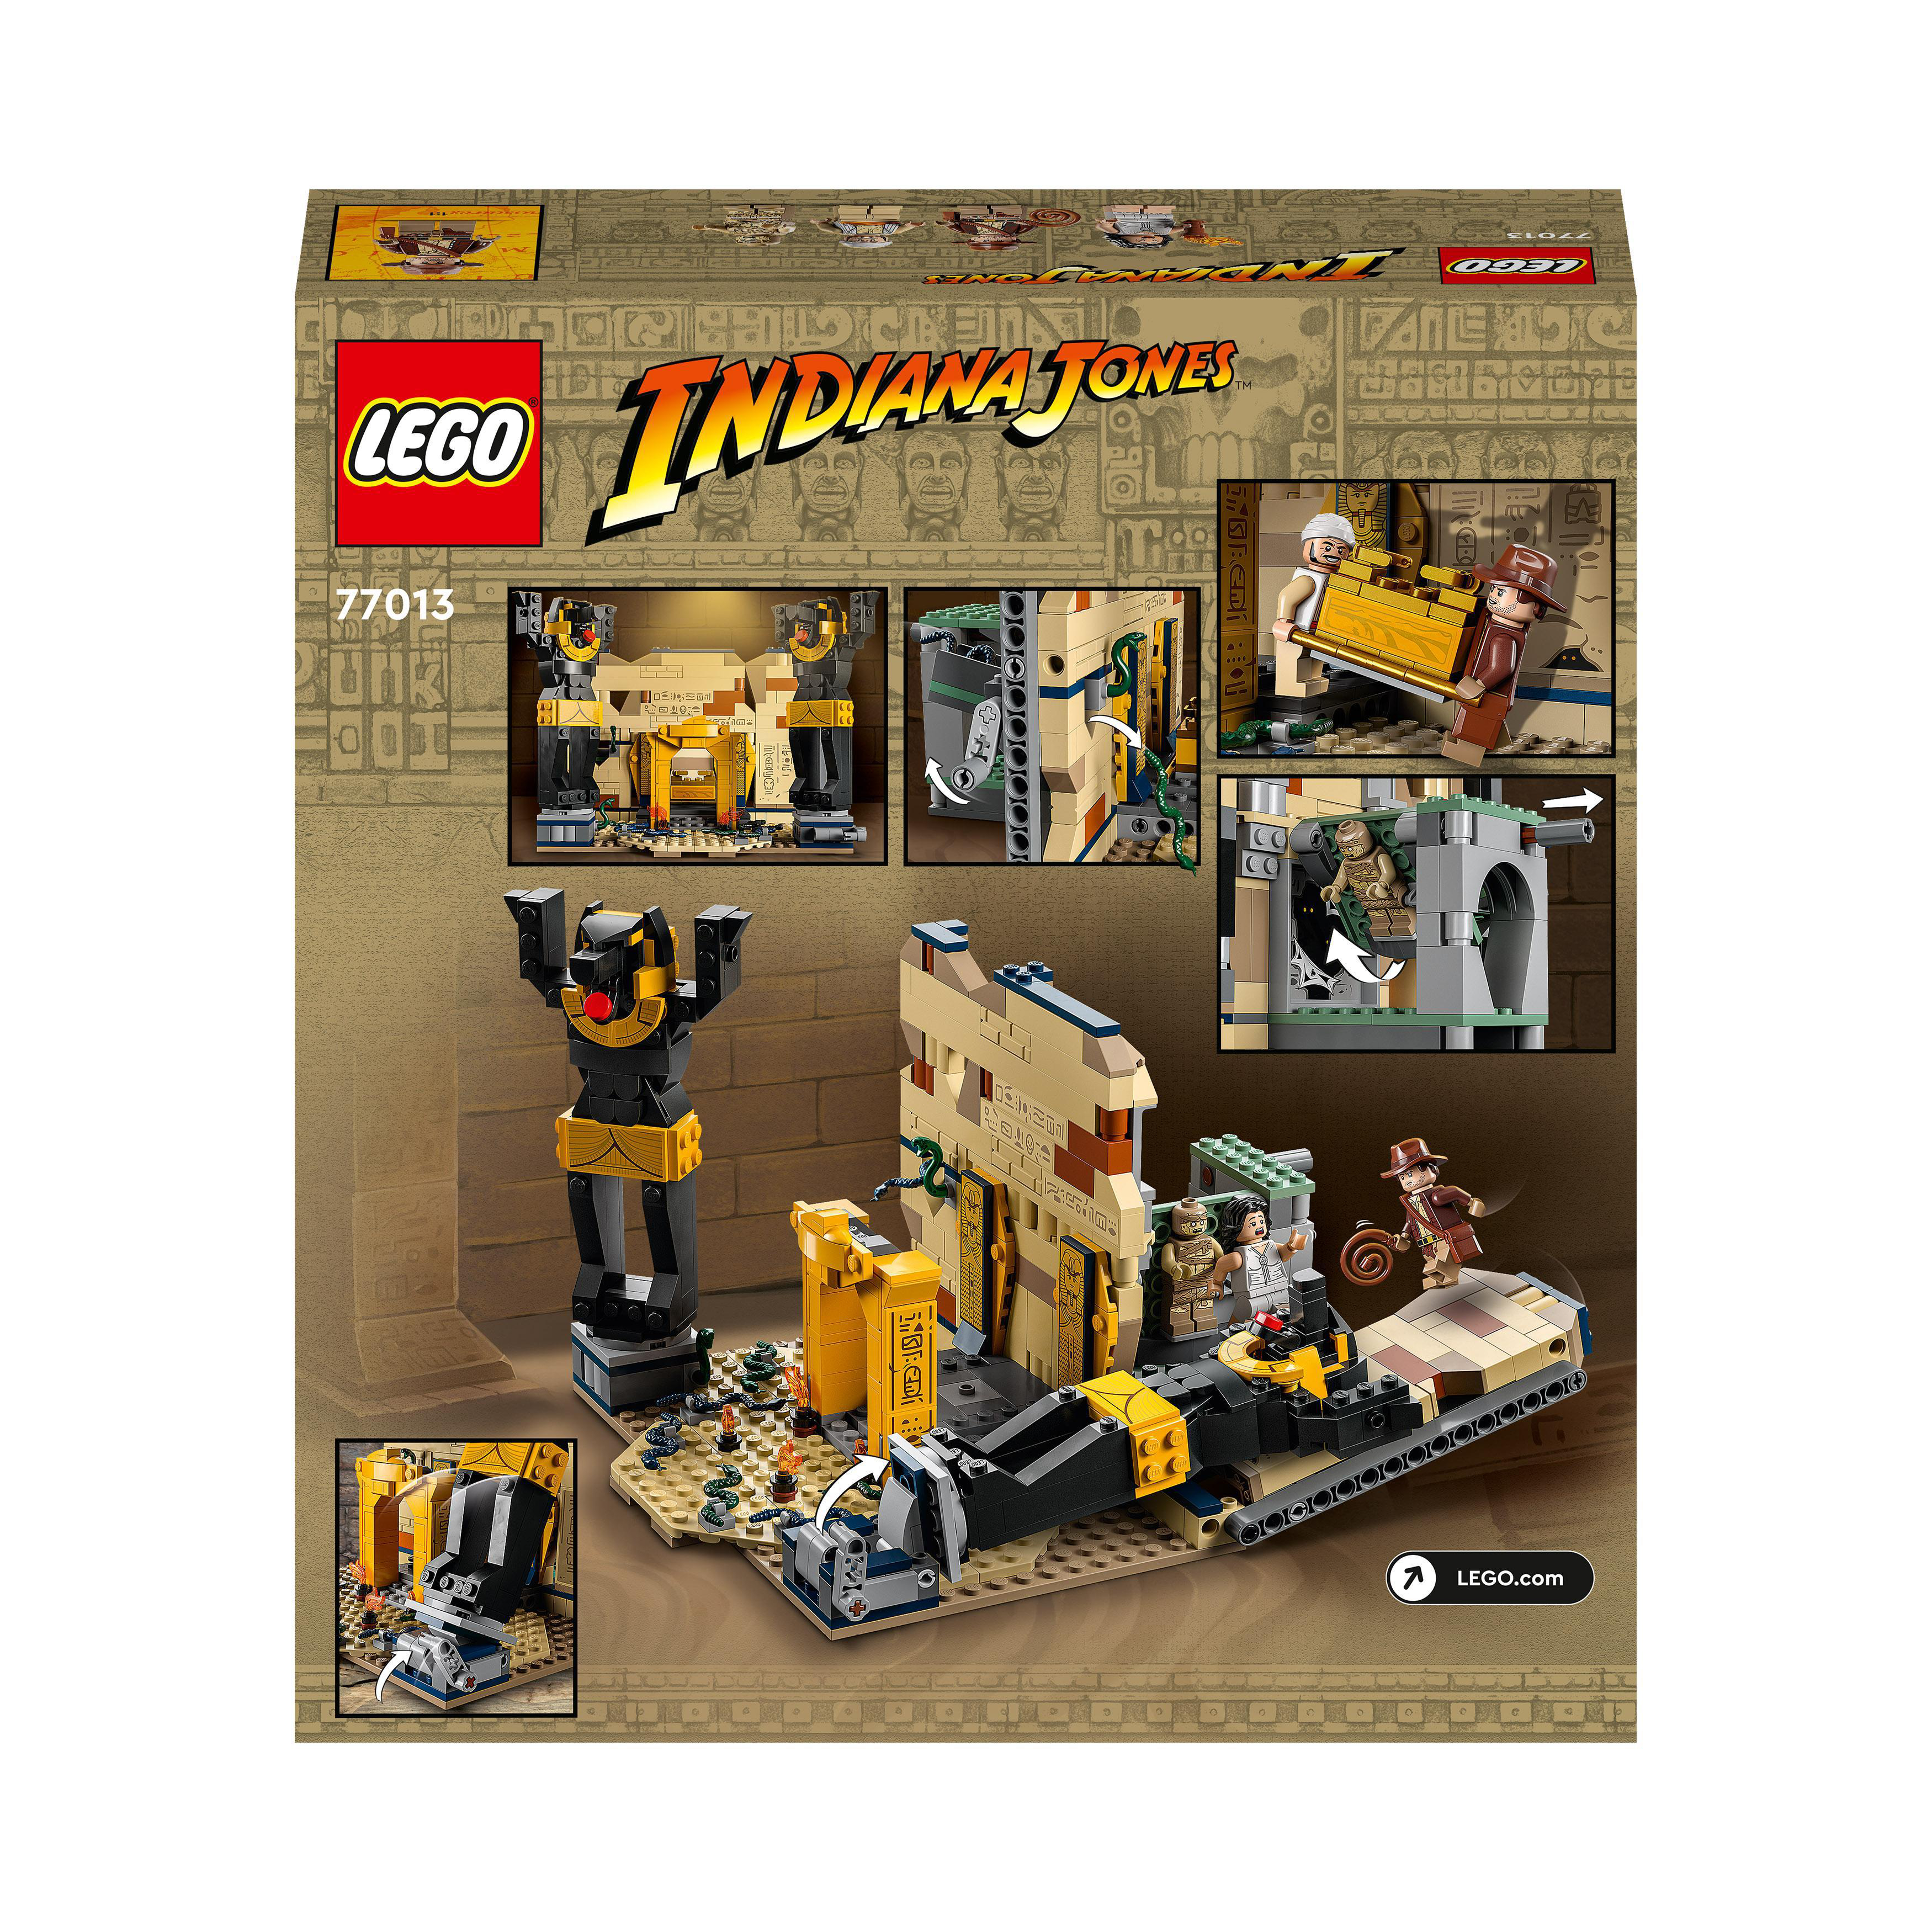 LEGO Indiana Jones 77013 Flucht dem Mehrfarbig Grabmal aus Bausatz